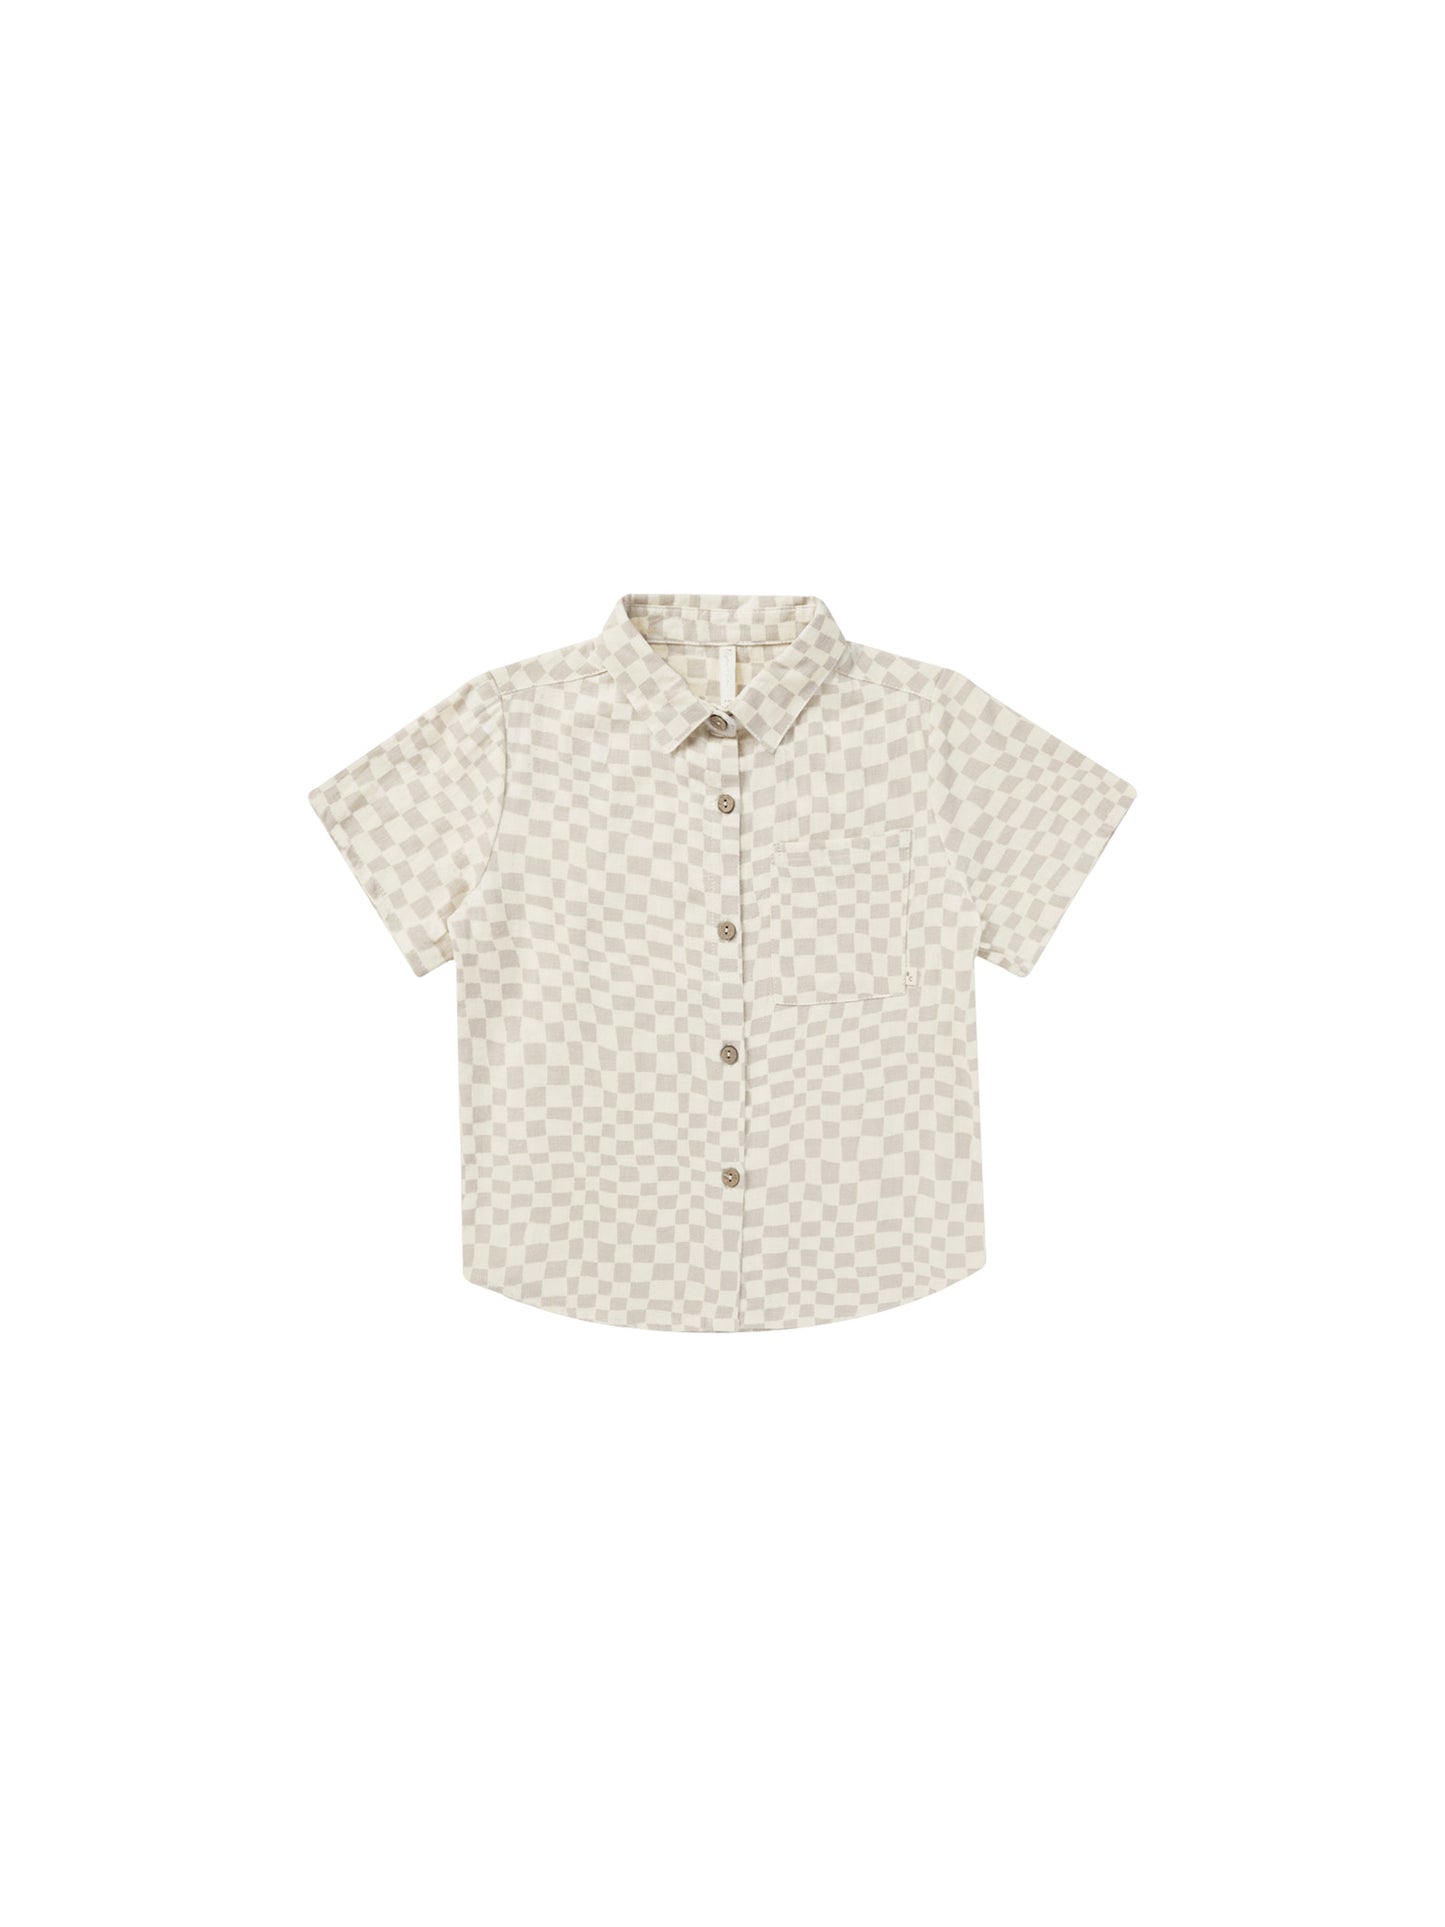 Rylee + Cru Collared Short Sleeve Shirt Dove Check